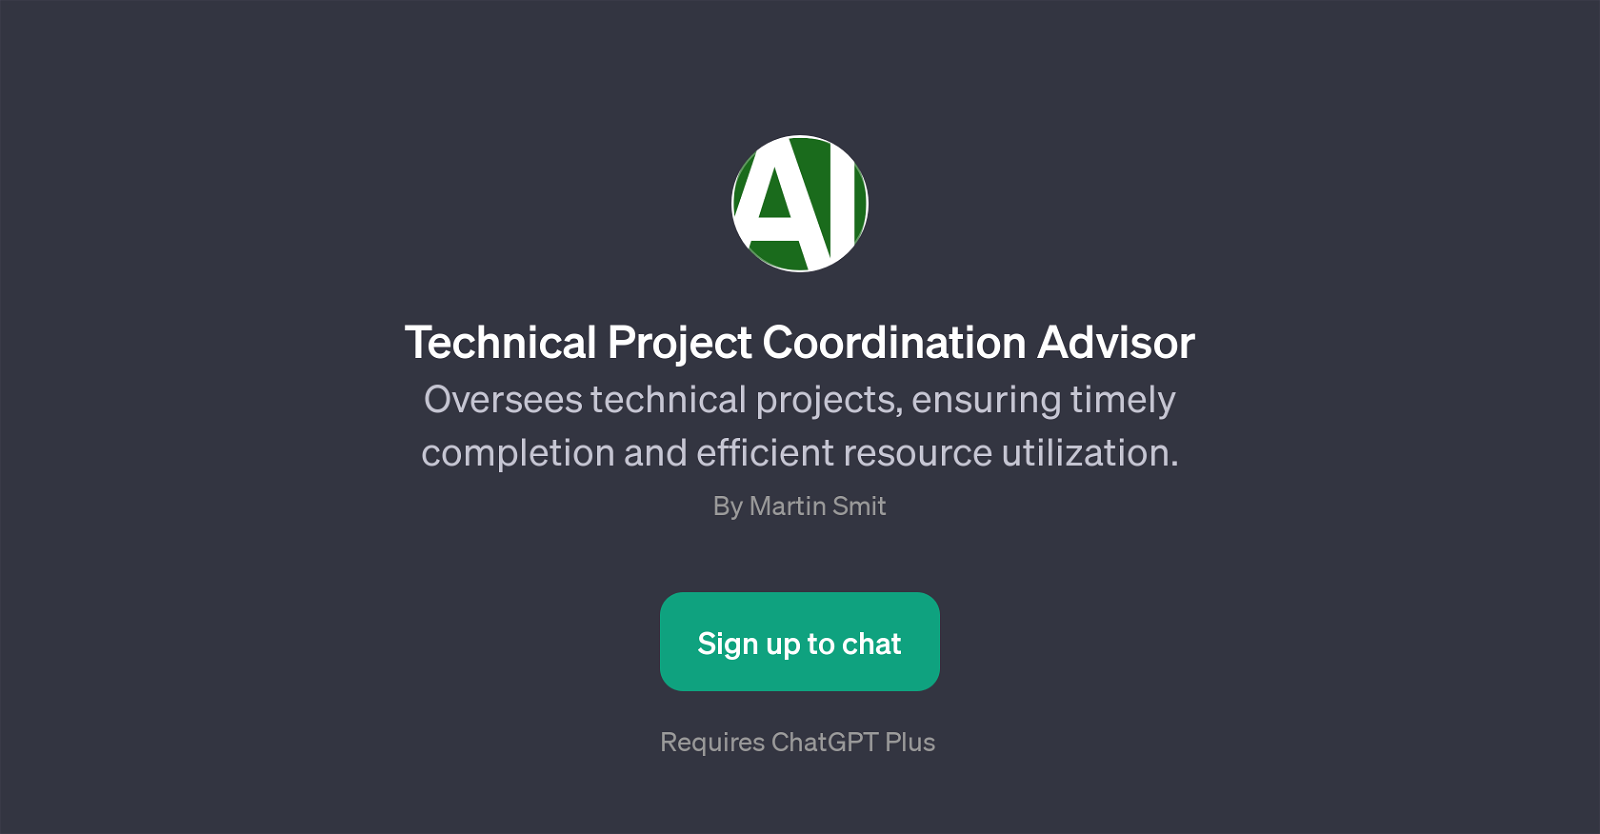 Technical Project Coordination Advisor website